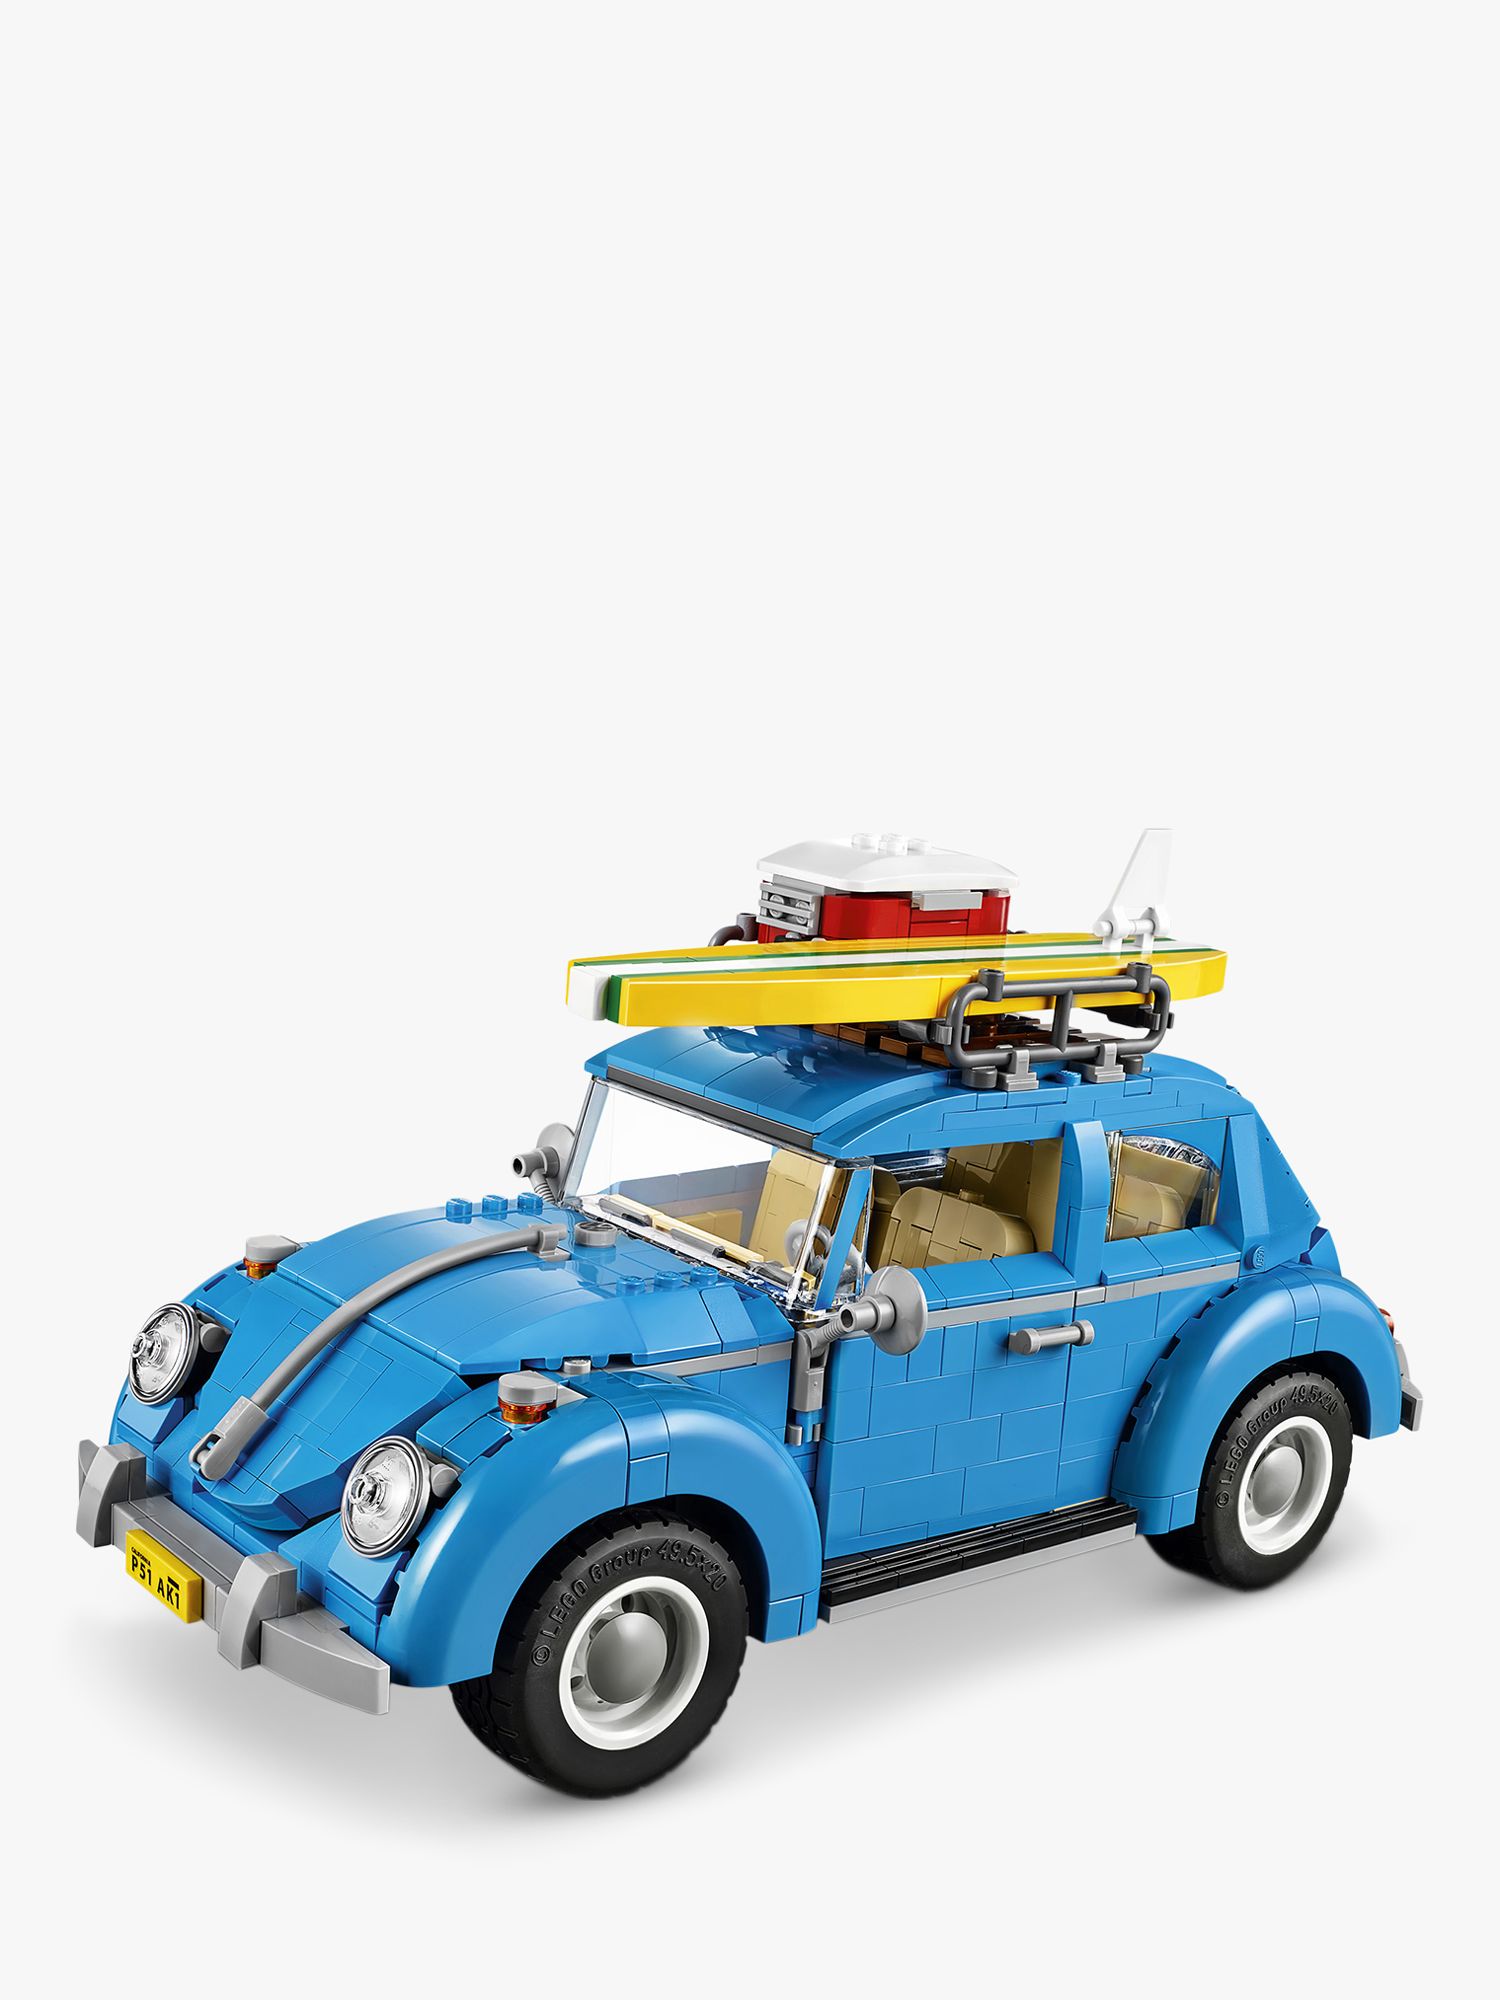 vw beetle lego set